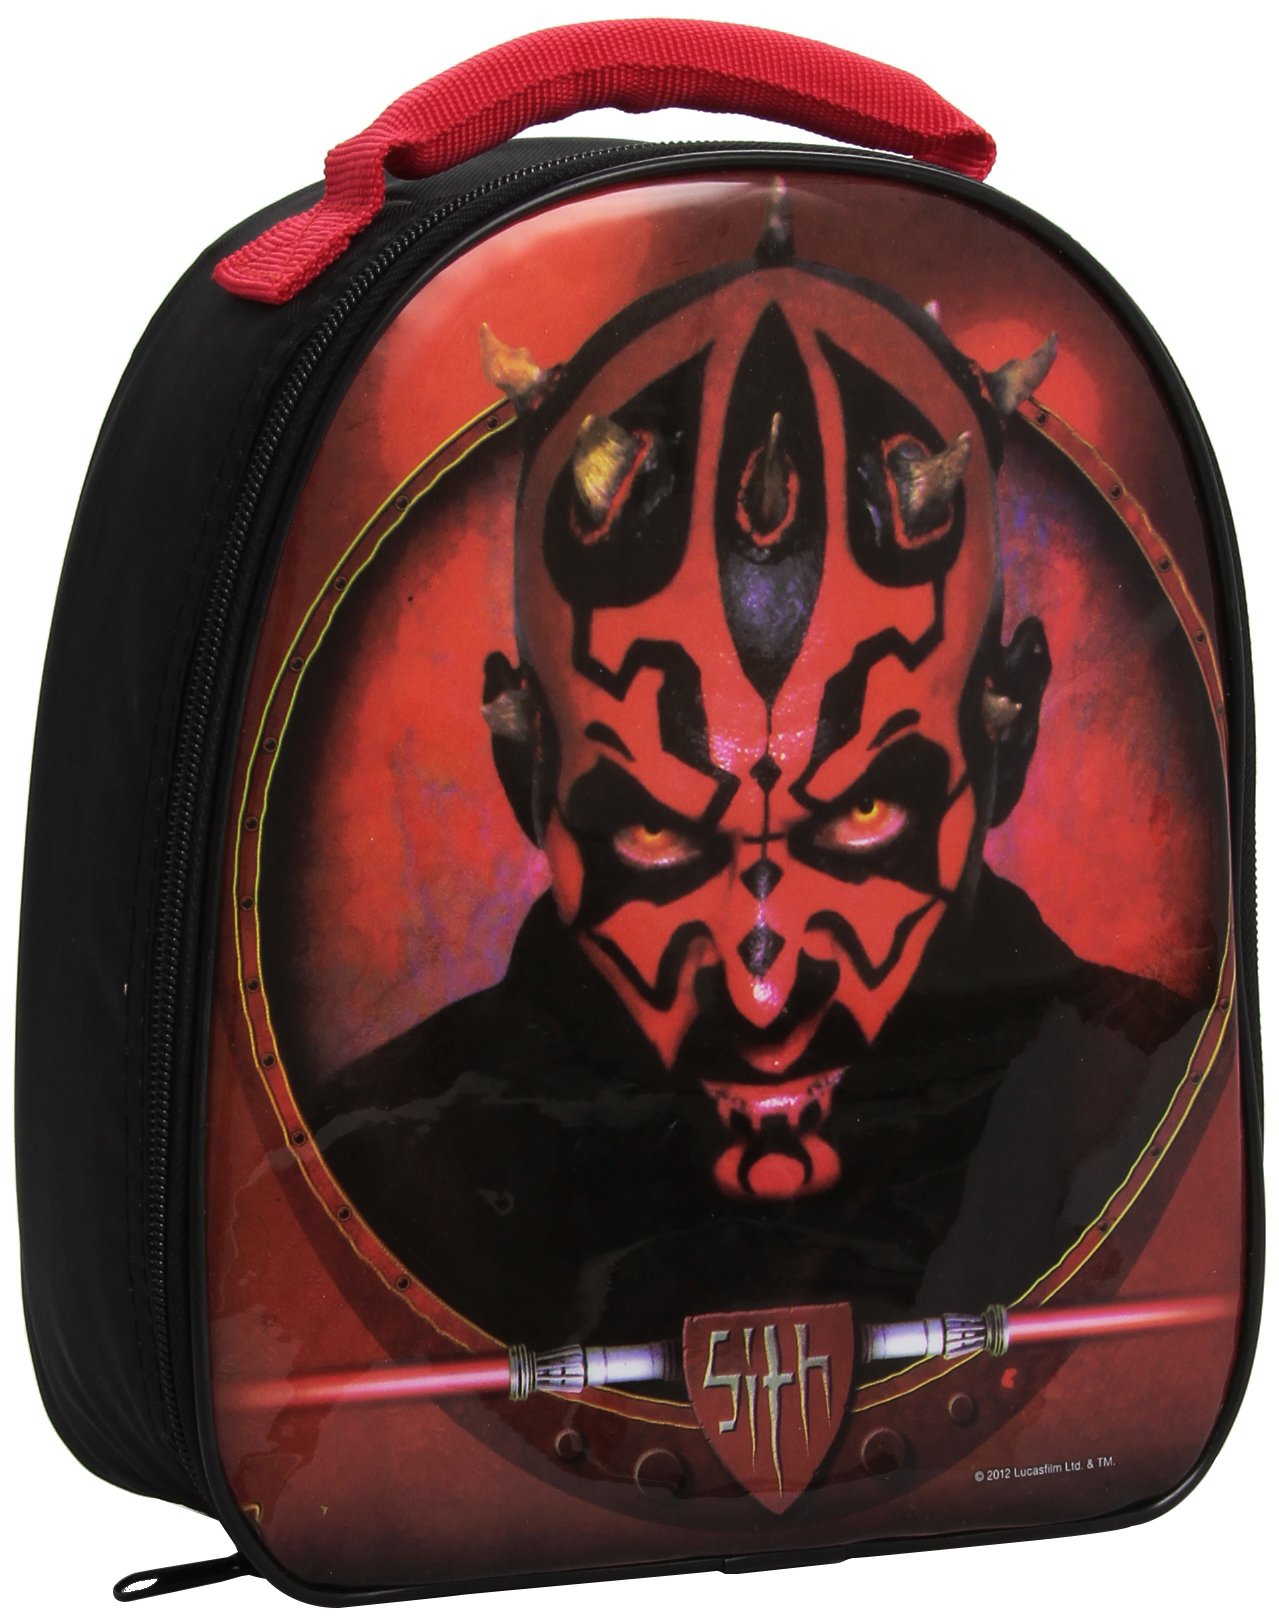 Star Wars 'Darth Maul' School Premium Lunch Bag Insulated